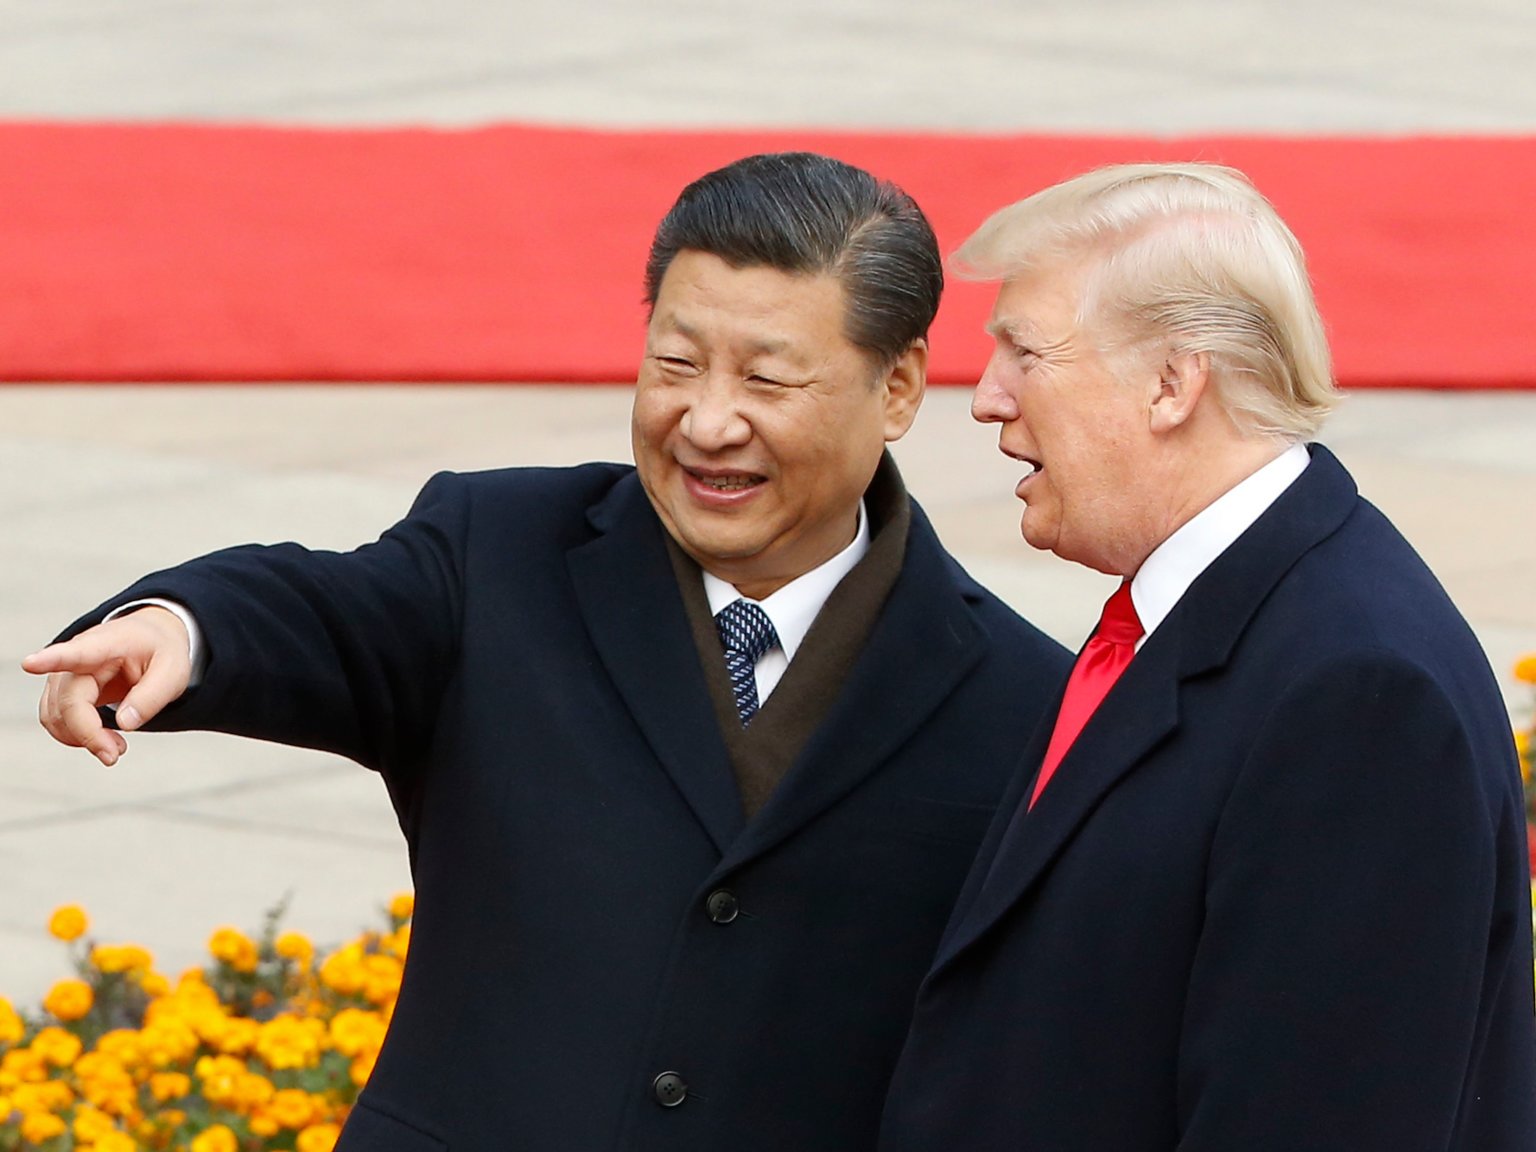 De Chinese president Xi Jinping en zijn Amerikaanse collega Donald Trump